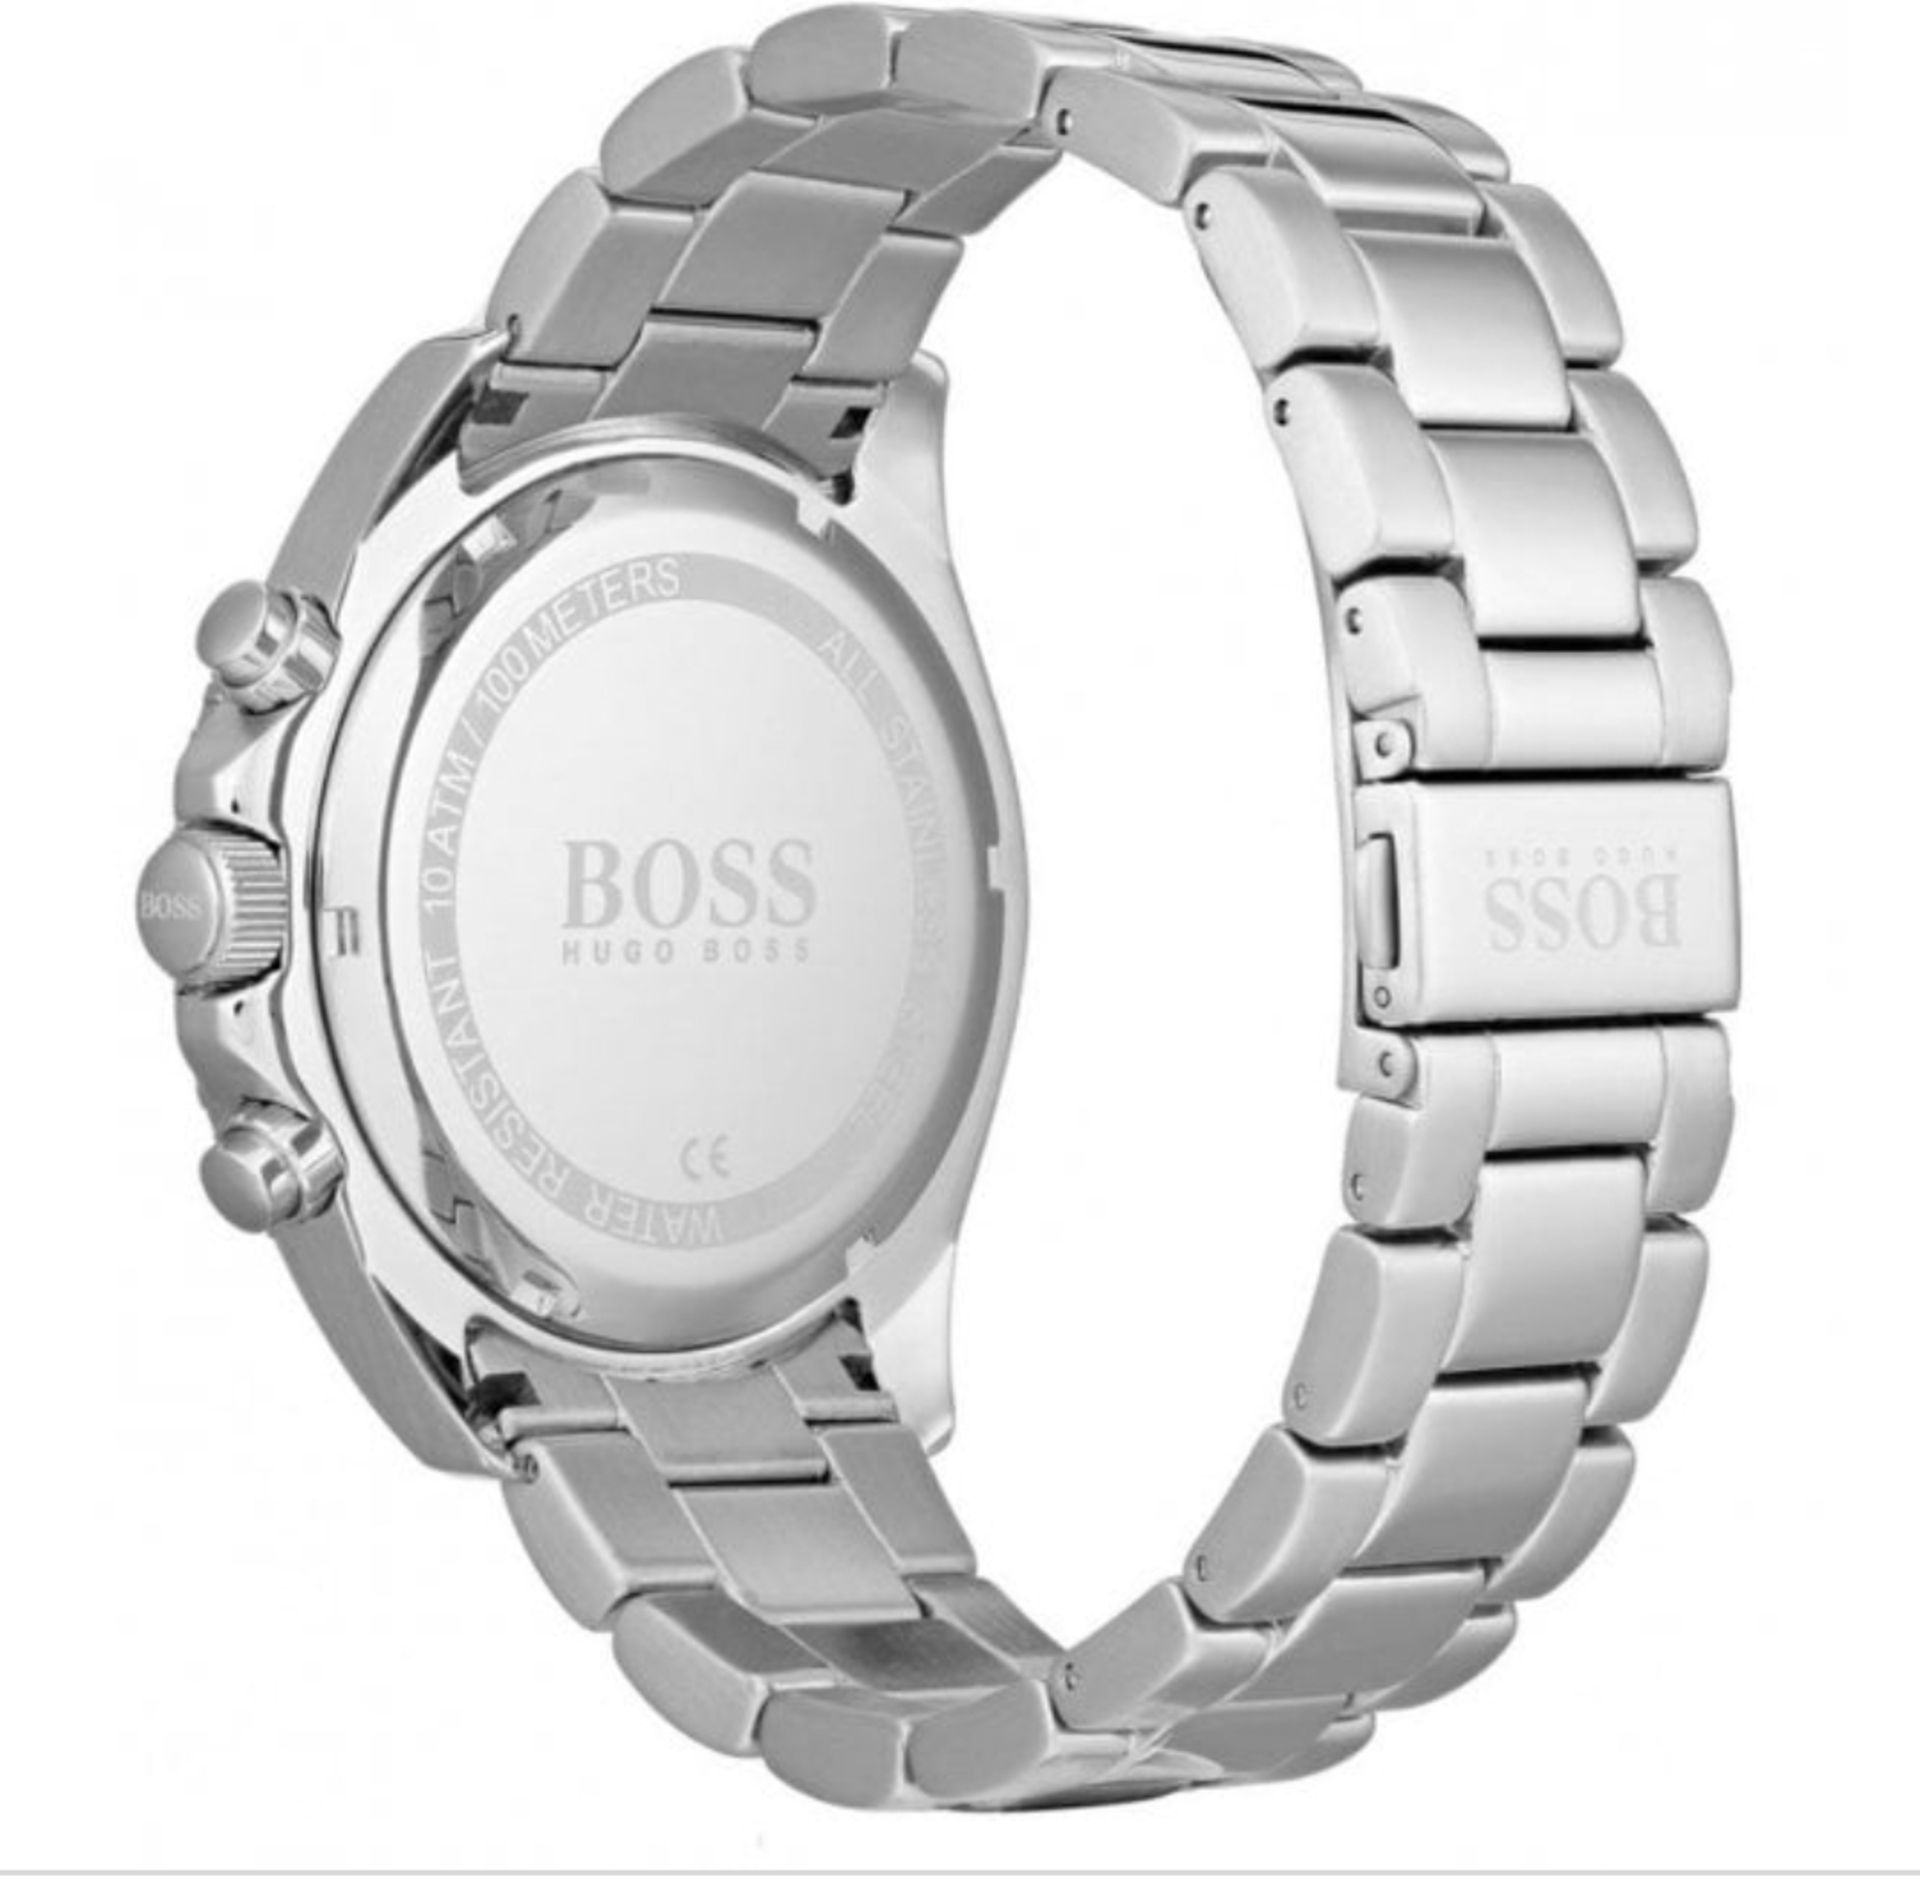 Hugo Boss 1513704 Men's Ocean Edition Blue Dial Silver Bracelet Chronograph Watch - Image 6 of 6